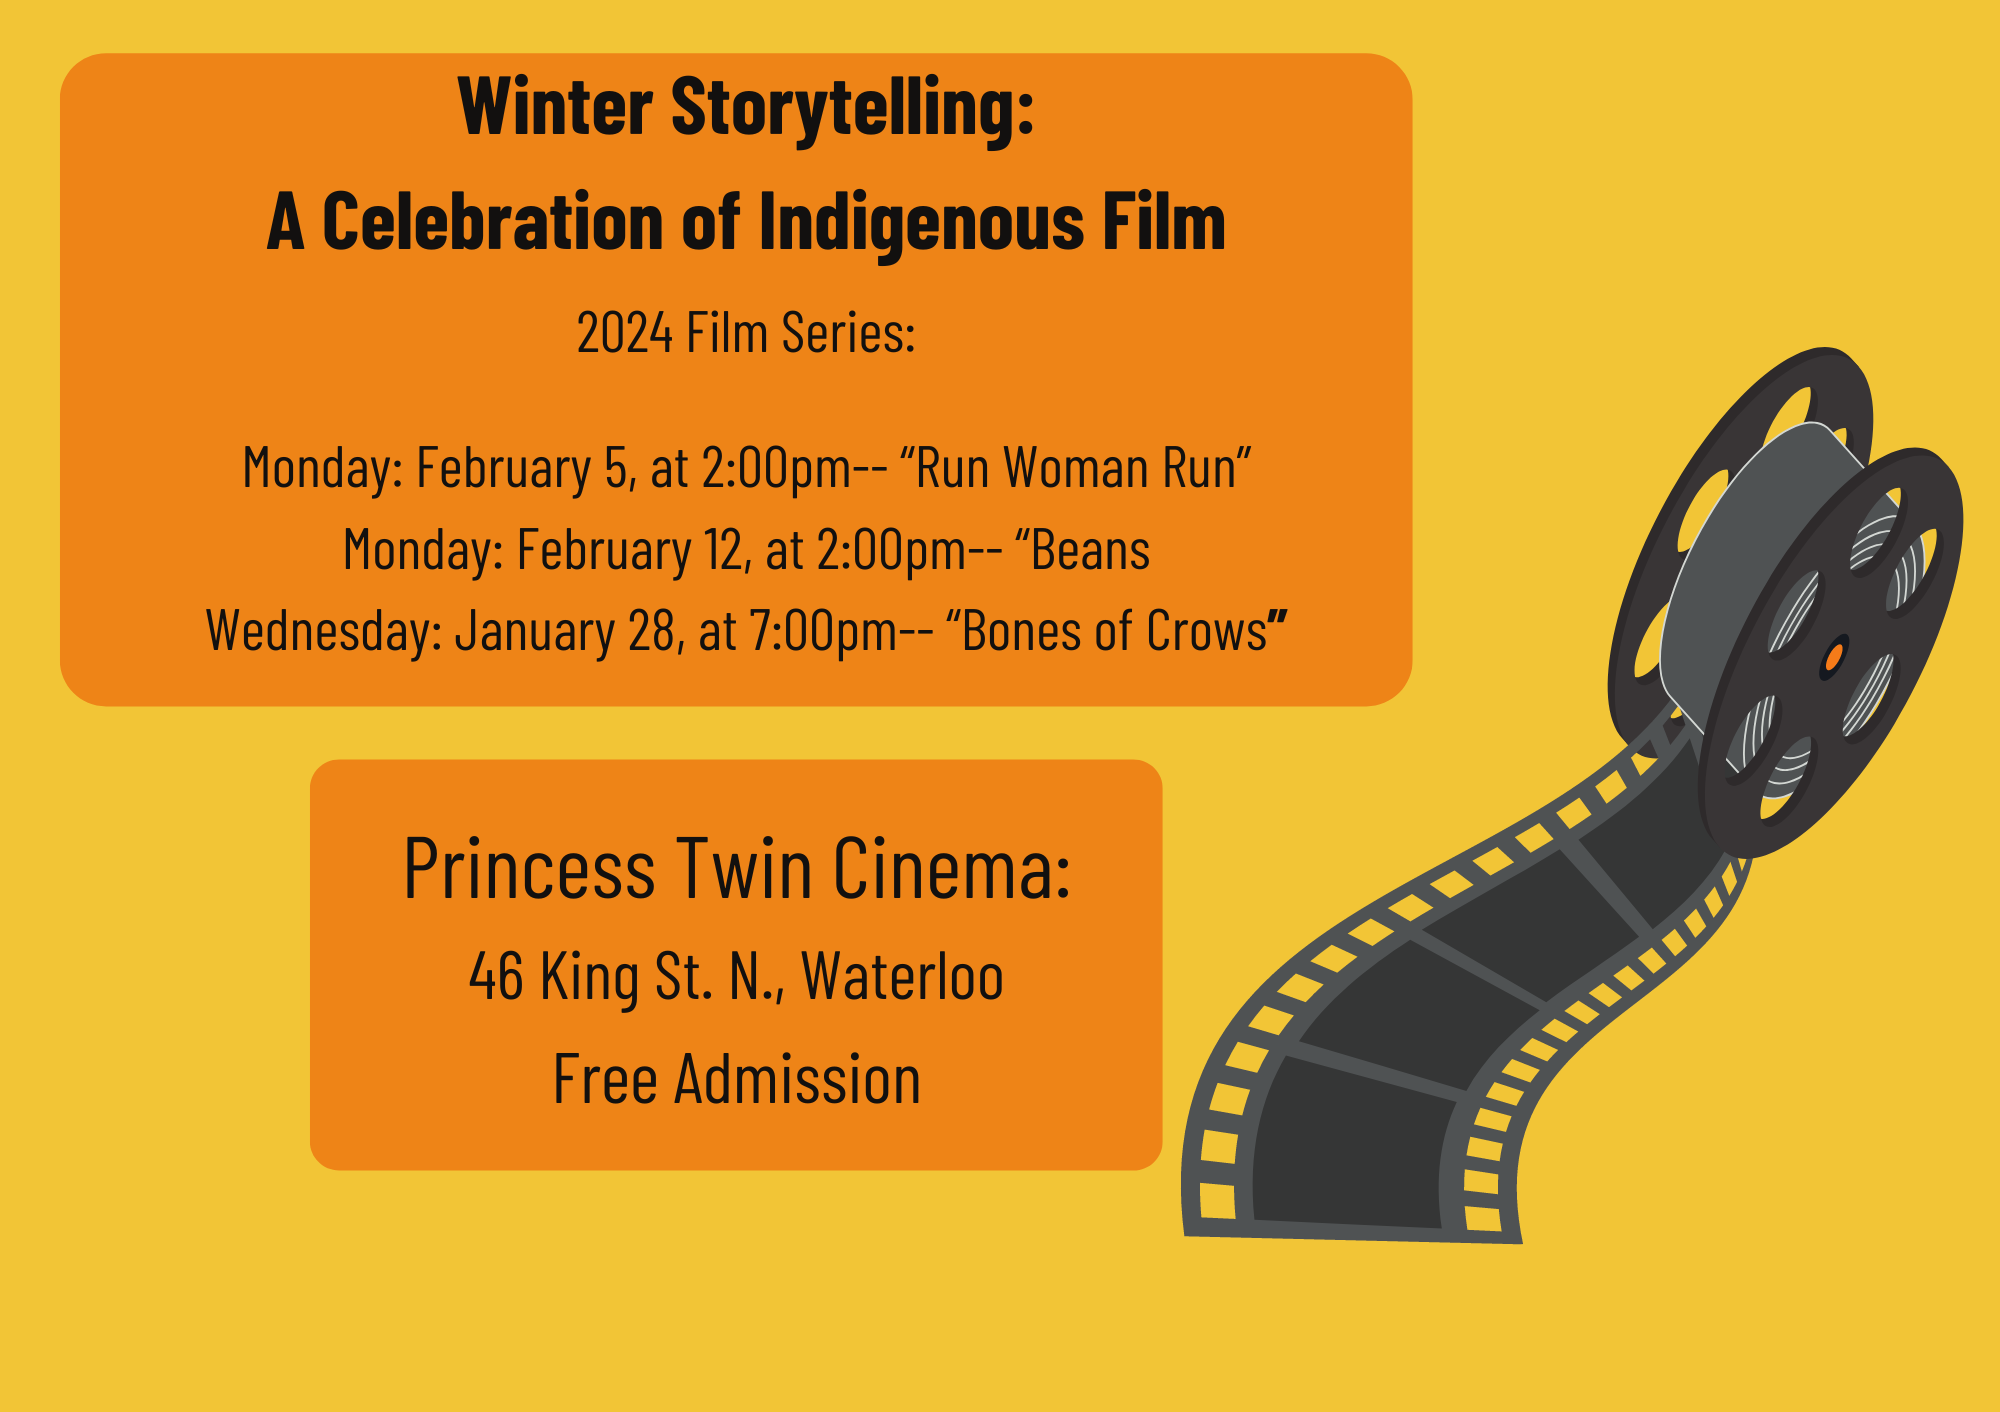 Winter Storytelling: A celebration of Indigenous Film